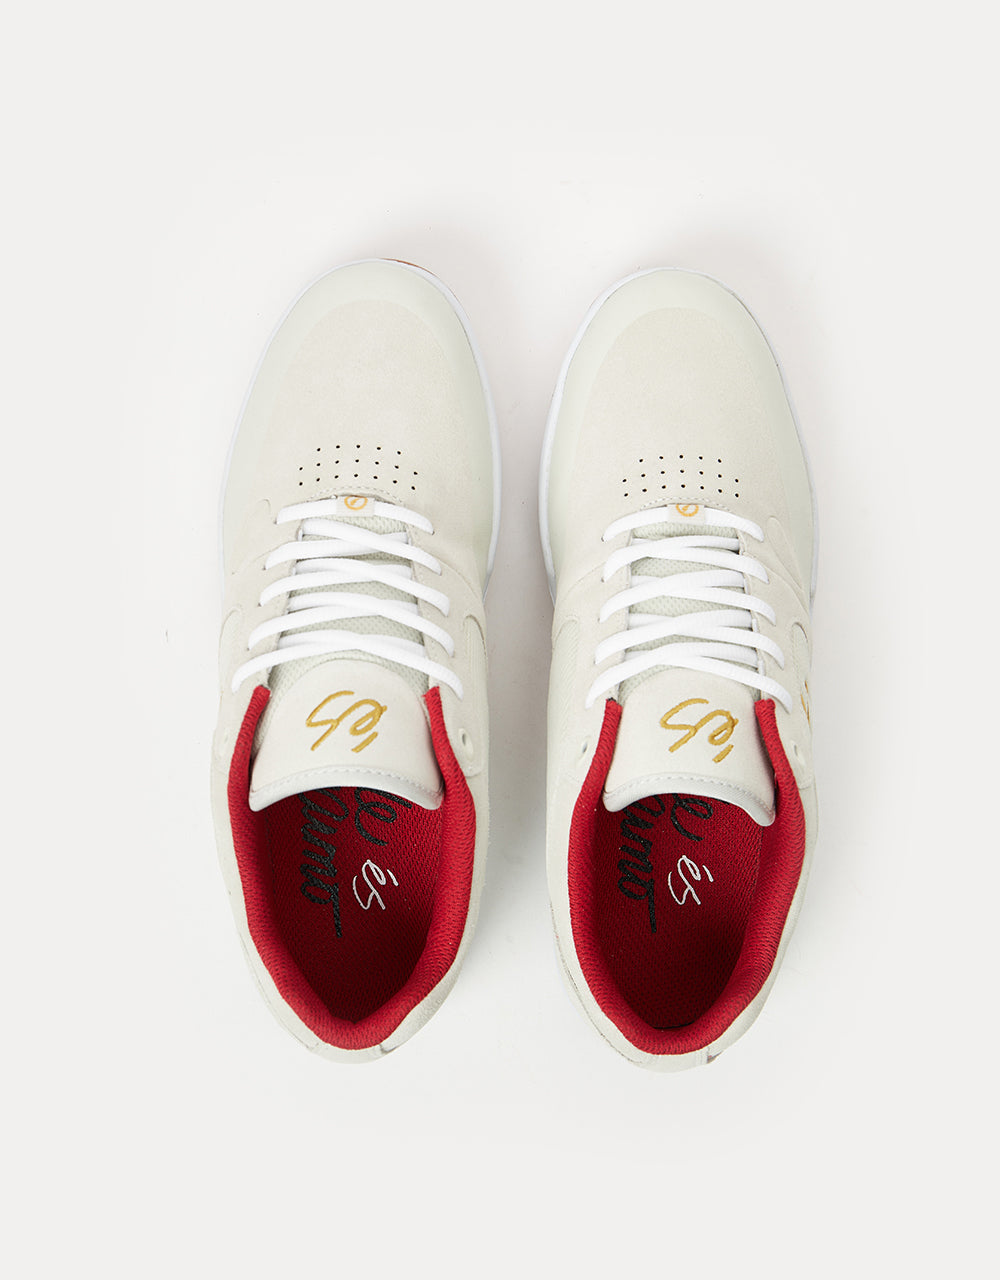 éS Swift 1.5 Skate Shoes - White/Red/Gum